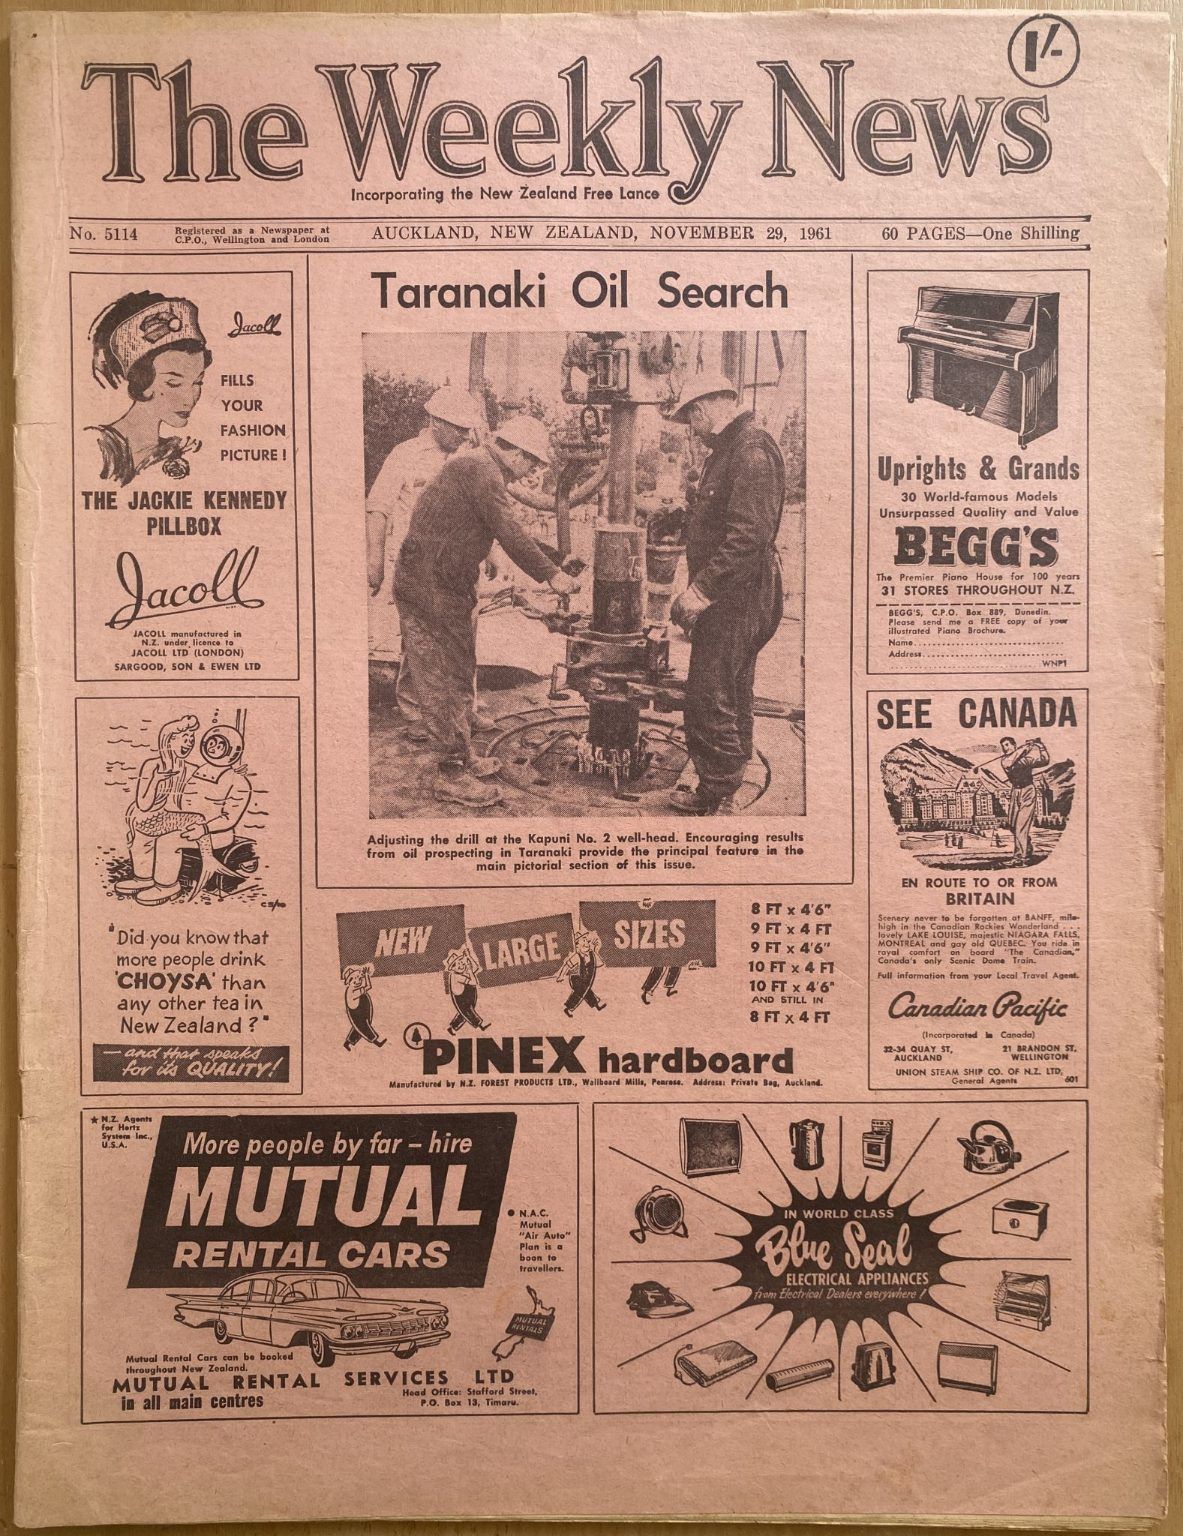 OLD NEWSPAPER: The Weekly News - No. 5114, 29 November 1961